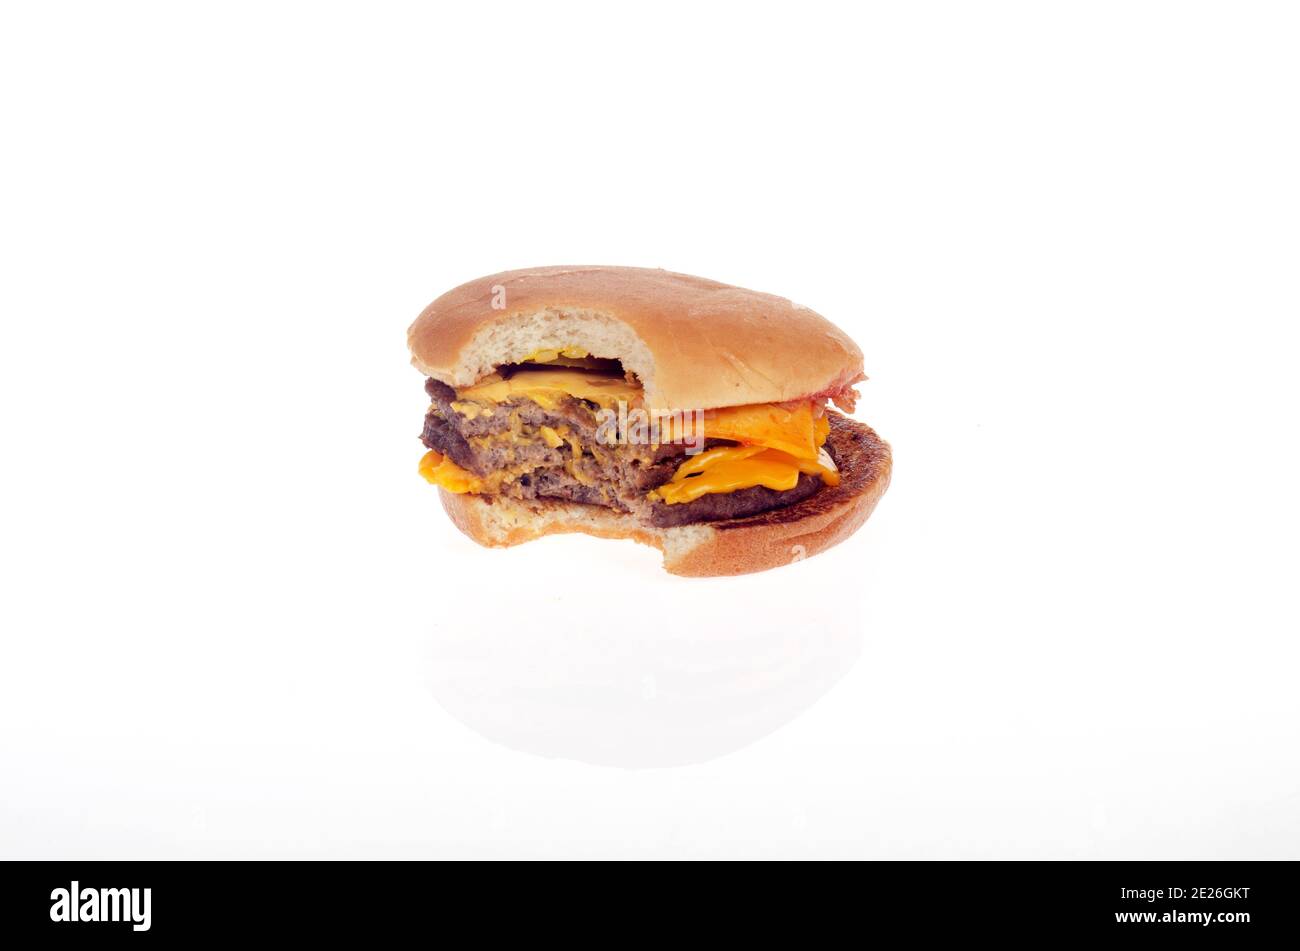 McDonalds Triple Cheeseburger with bite taken out on white background Stock Photo